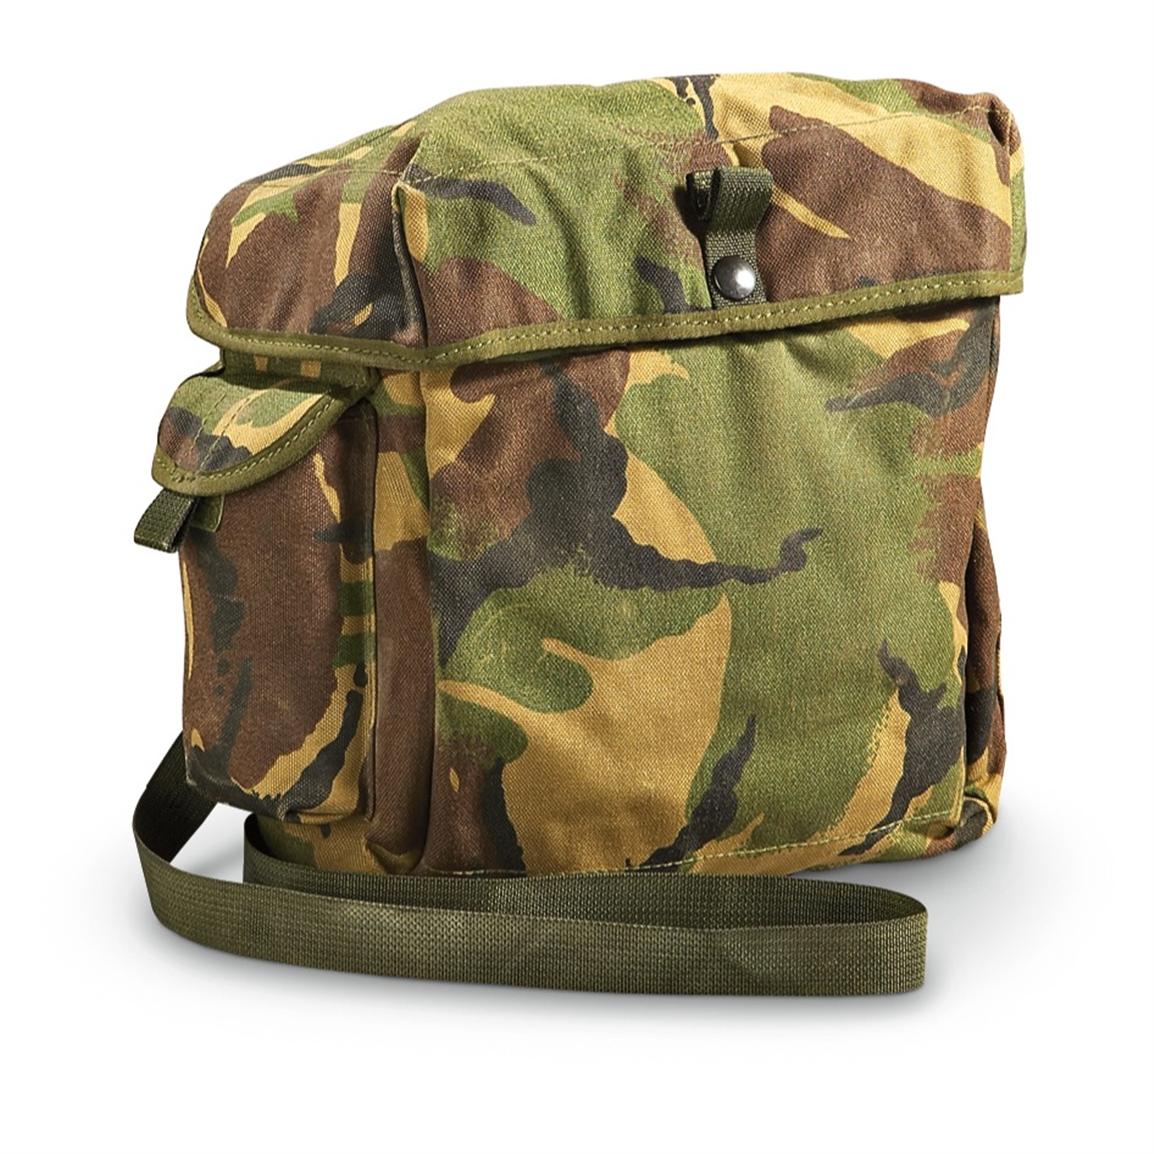 British Military Surplus Gas Mask Bag